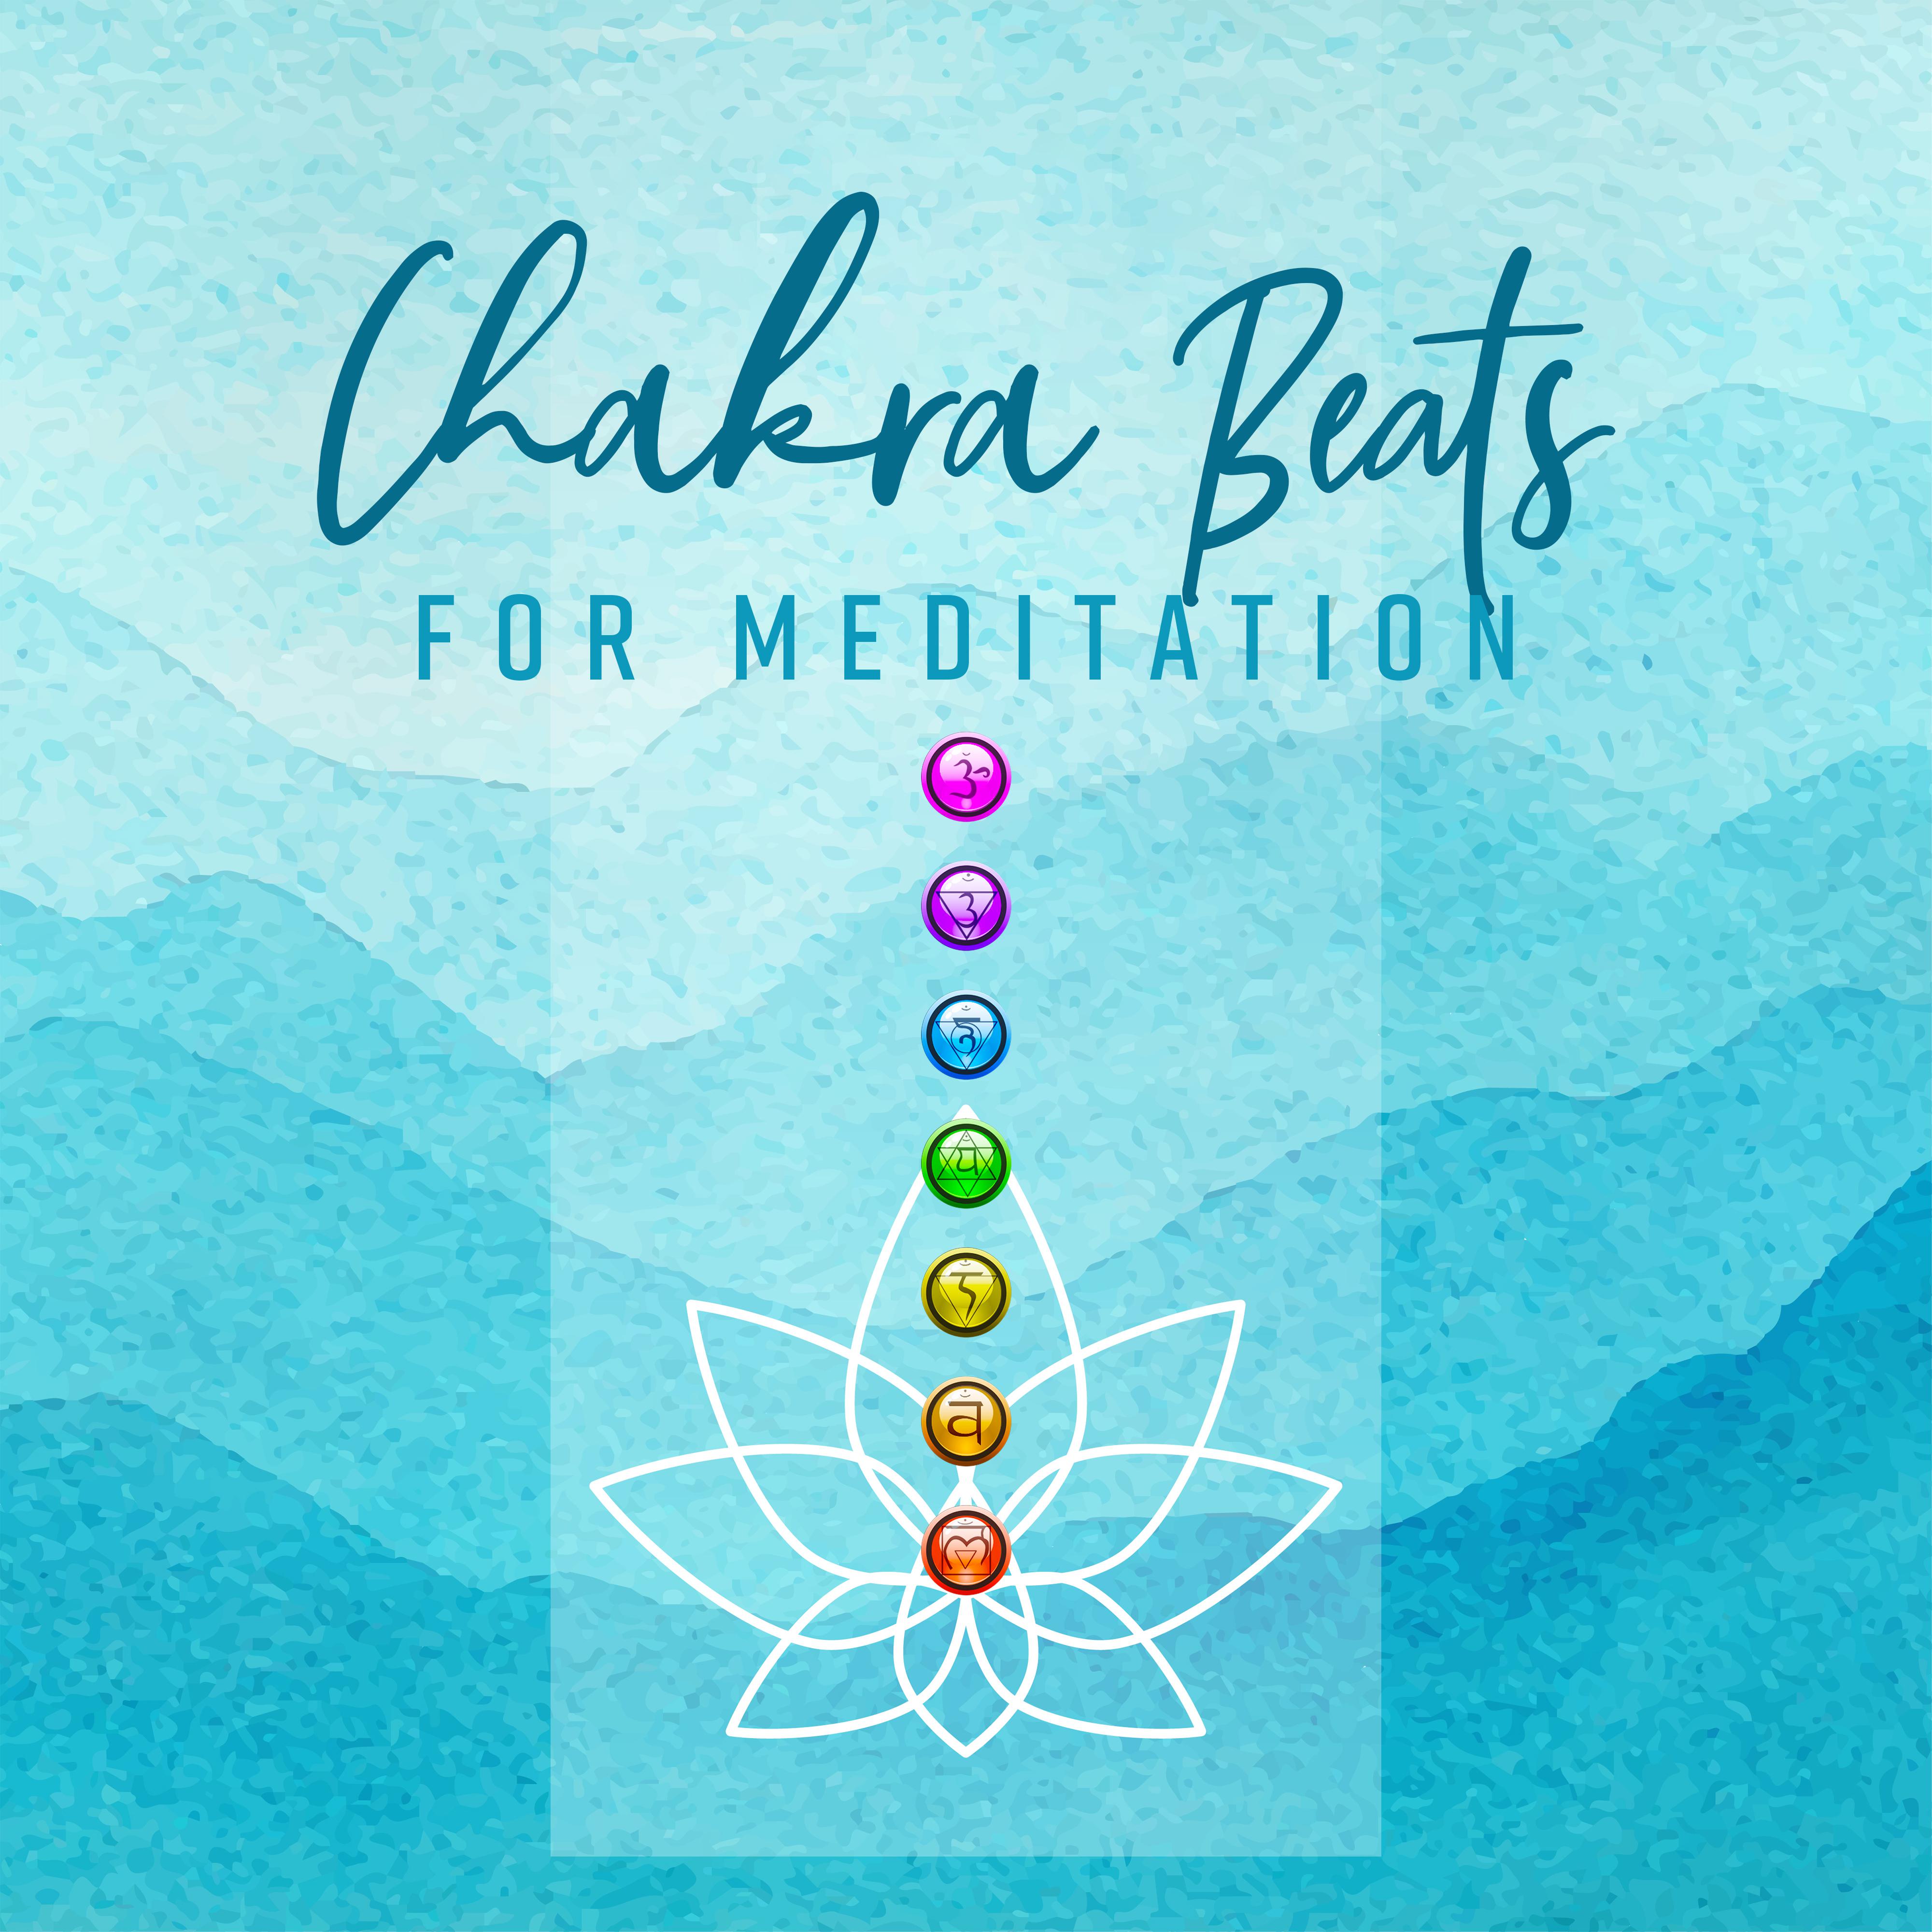 Chakra Beats for Meditation – Yoga Training, Healing Music, Chakra Suite, Inner Balance, Yoga Meditation, Stress Relief, Zen Serenity